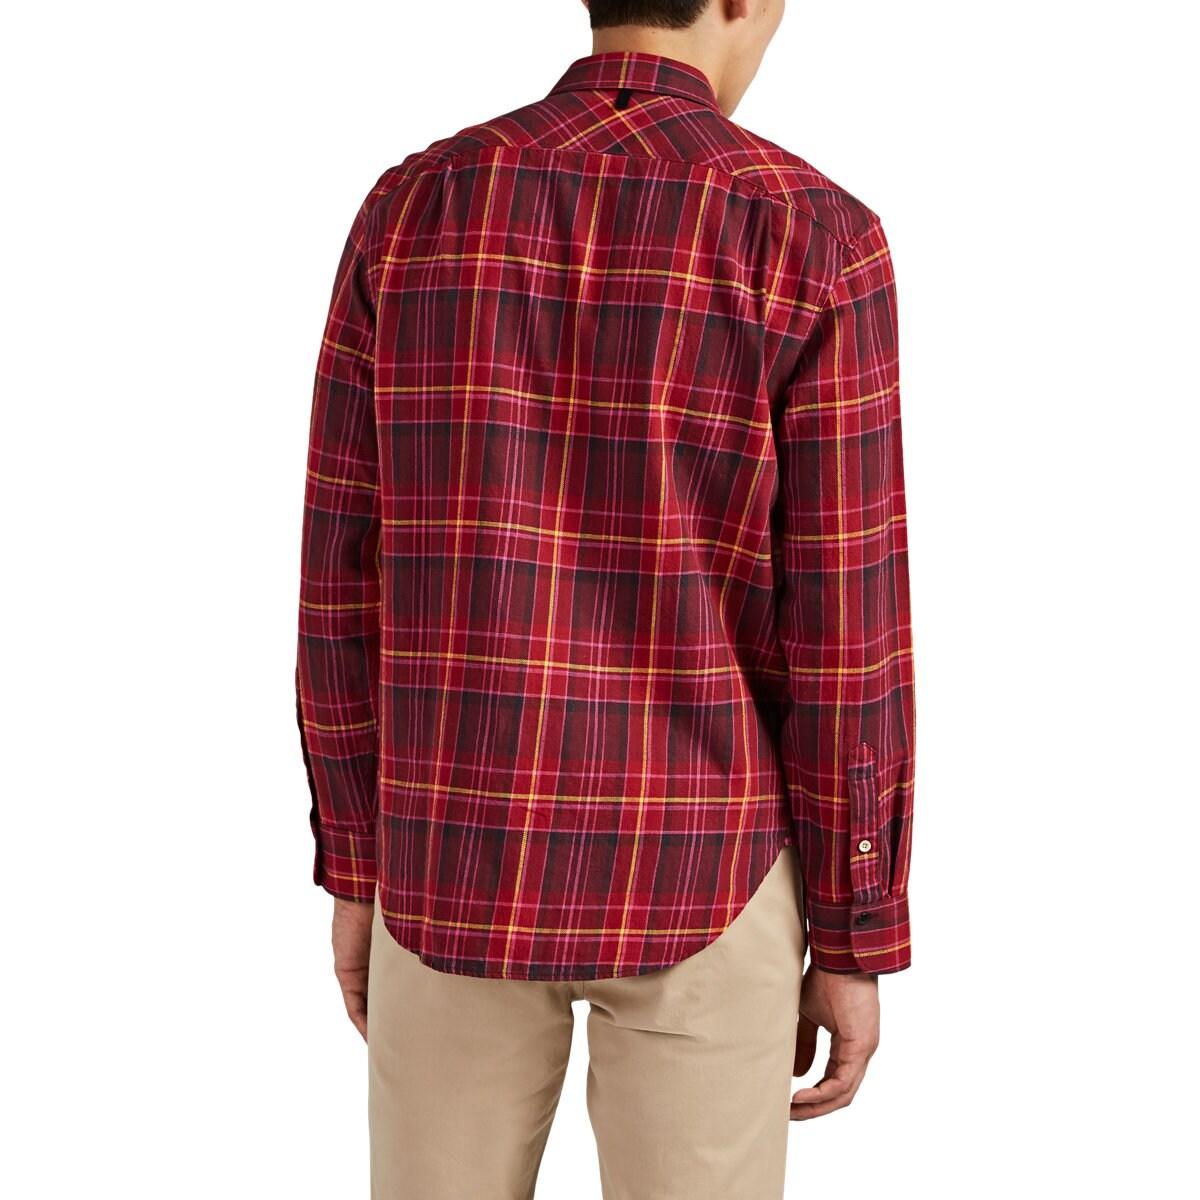 Rag & Bone Plaid Cotton Flannel Shirt in Red for Men - Lyst